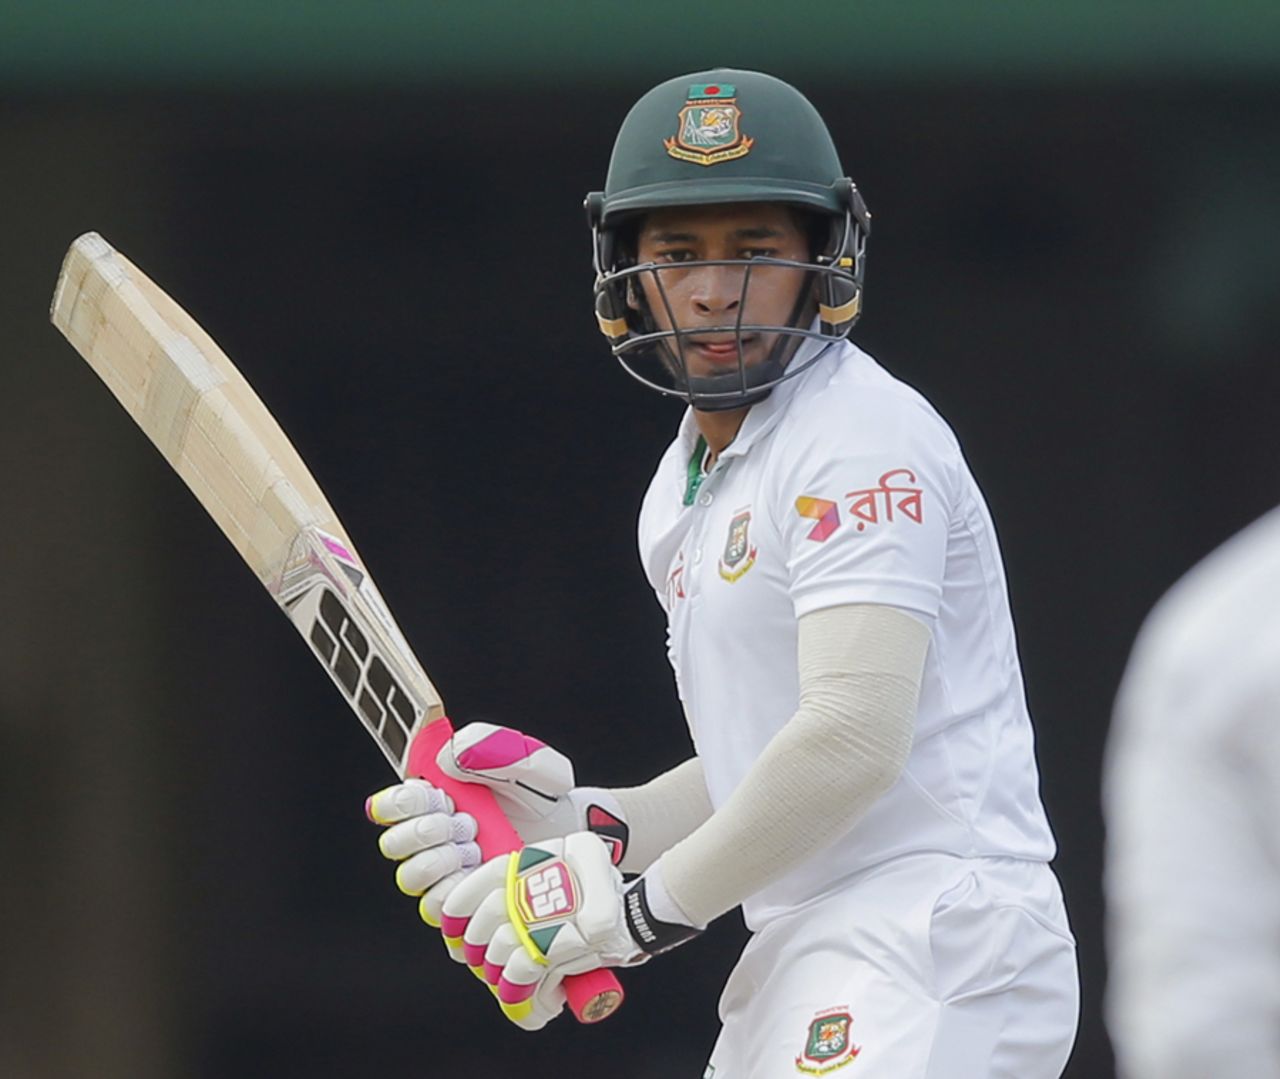 Mushfiqur Rahim reflects on a shot, Sri Lanka v Bangladesh, 2nd Test, Colombo, 3rd day, March 17, 2017